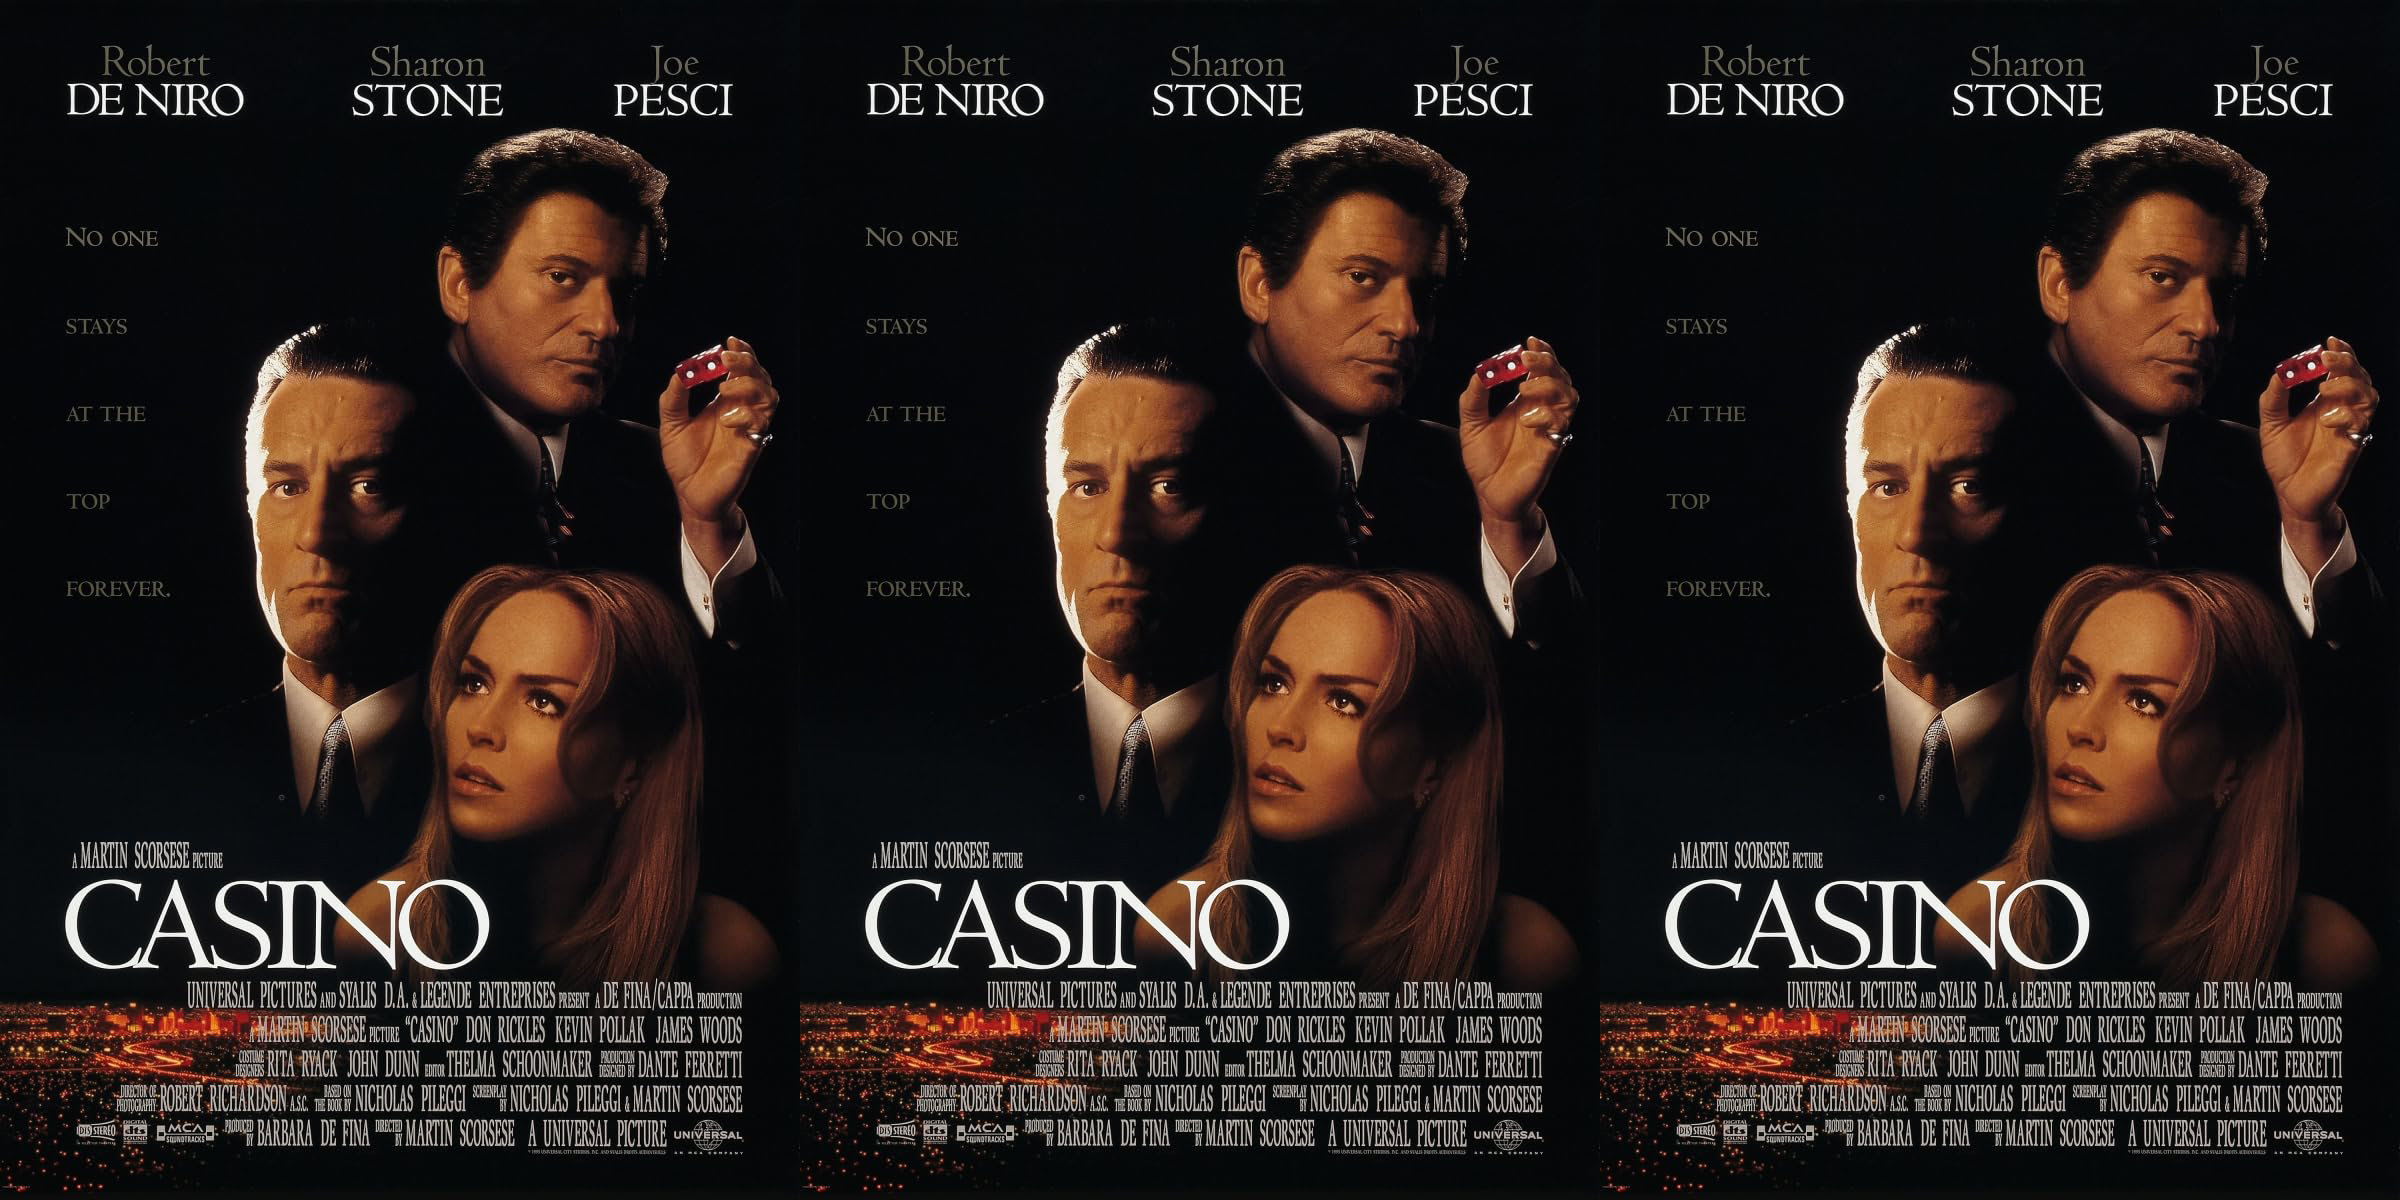 Casino, Peacock, Universal Pictures, Syalis DA, Légende Entreprises, De Fina-Cappa, GGG